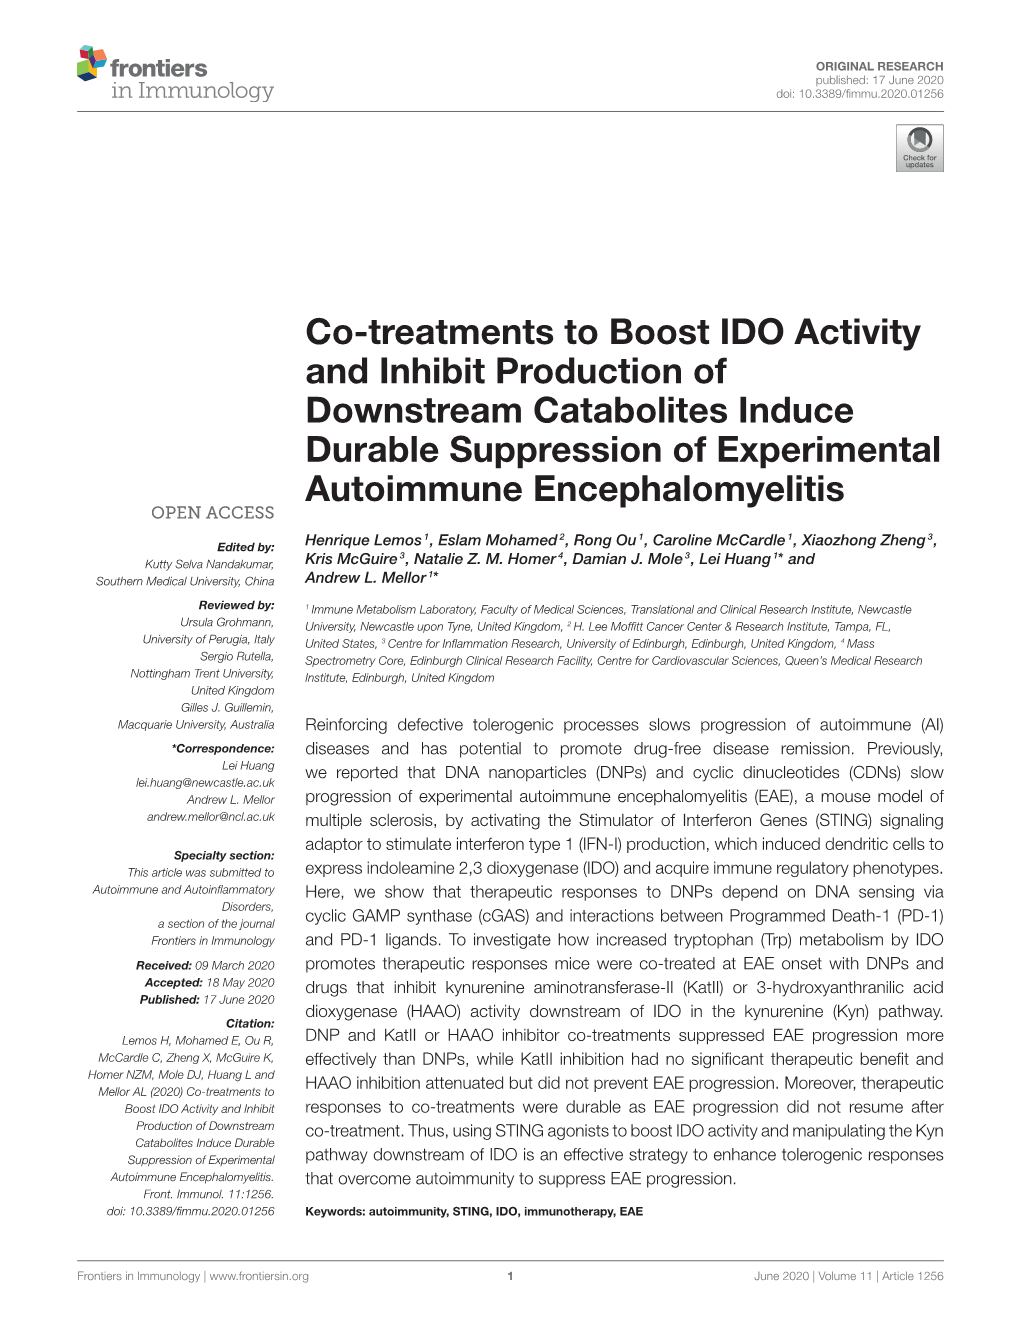 Co-Treatments to Boost IDO Activity and Inhibit Production of Downstream Catabolites Induce Durable Suppression of Experimental Autoimmune Encephalomyelitis